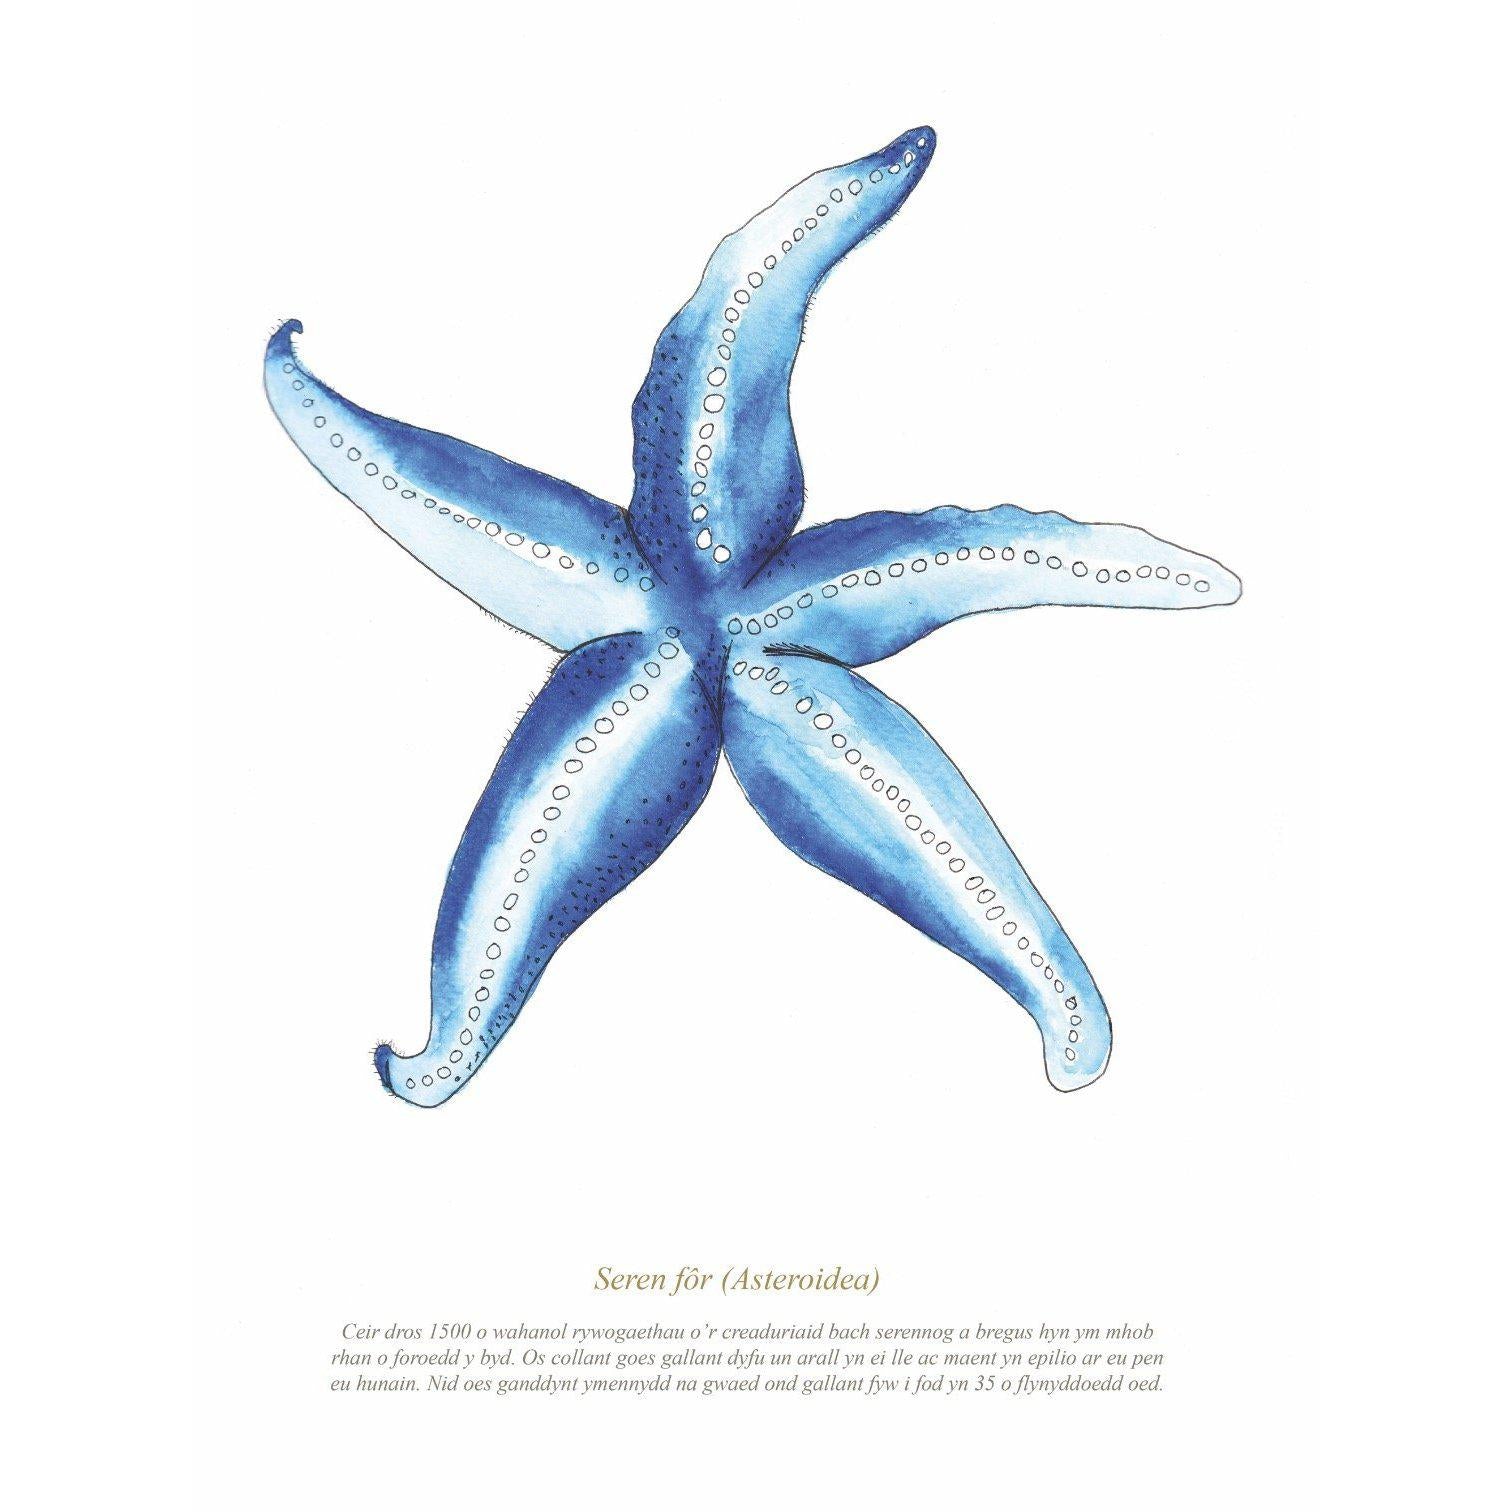 Print - Starfish Watercolour